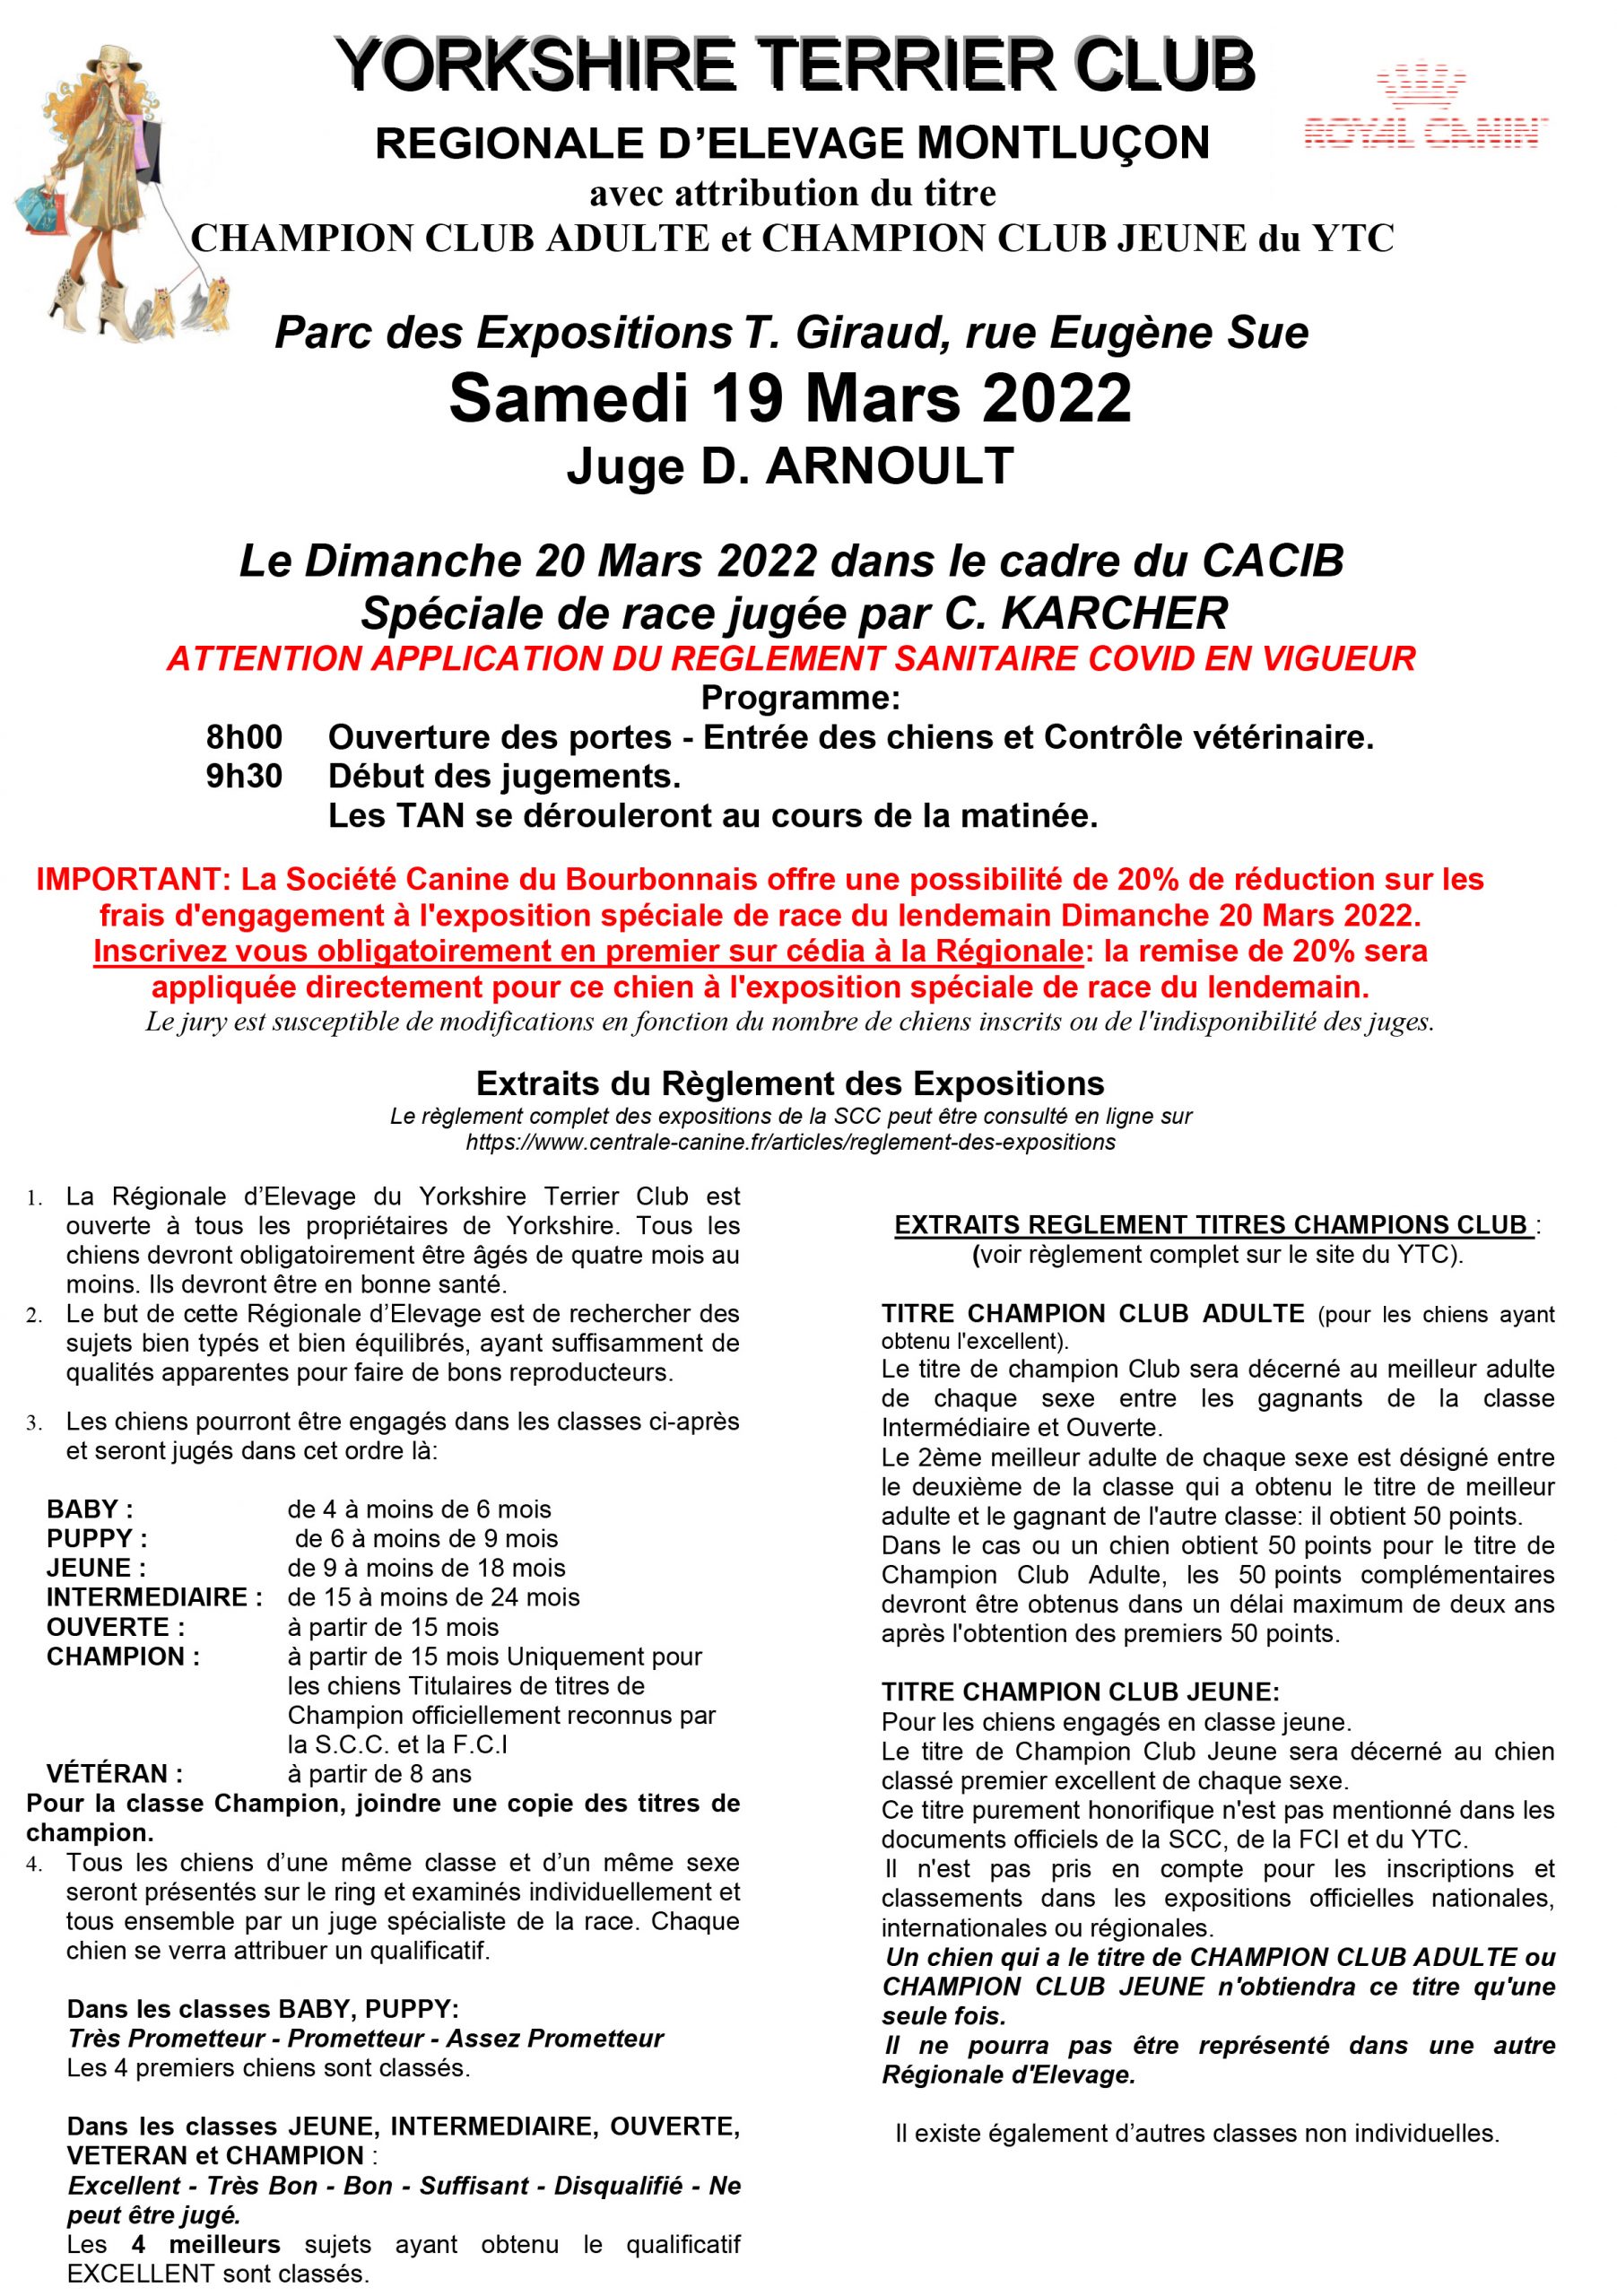 Microsoft Word - Feuille RE  MONTLUCON 2022.docx